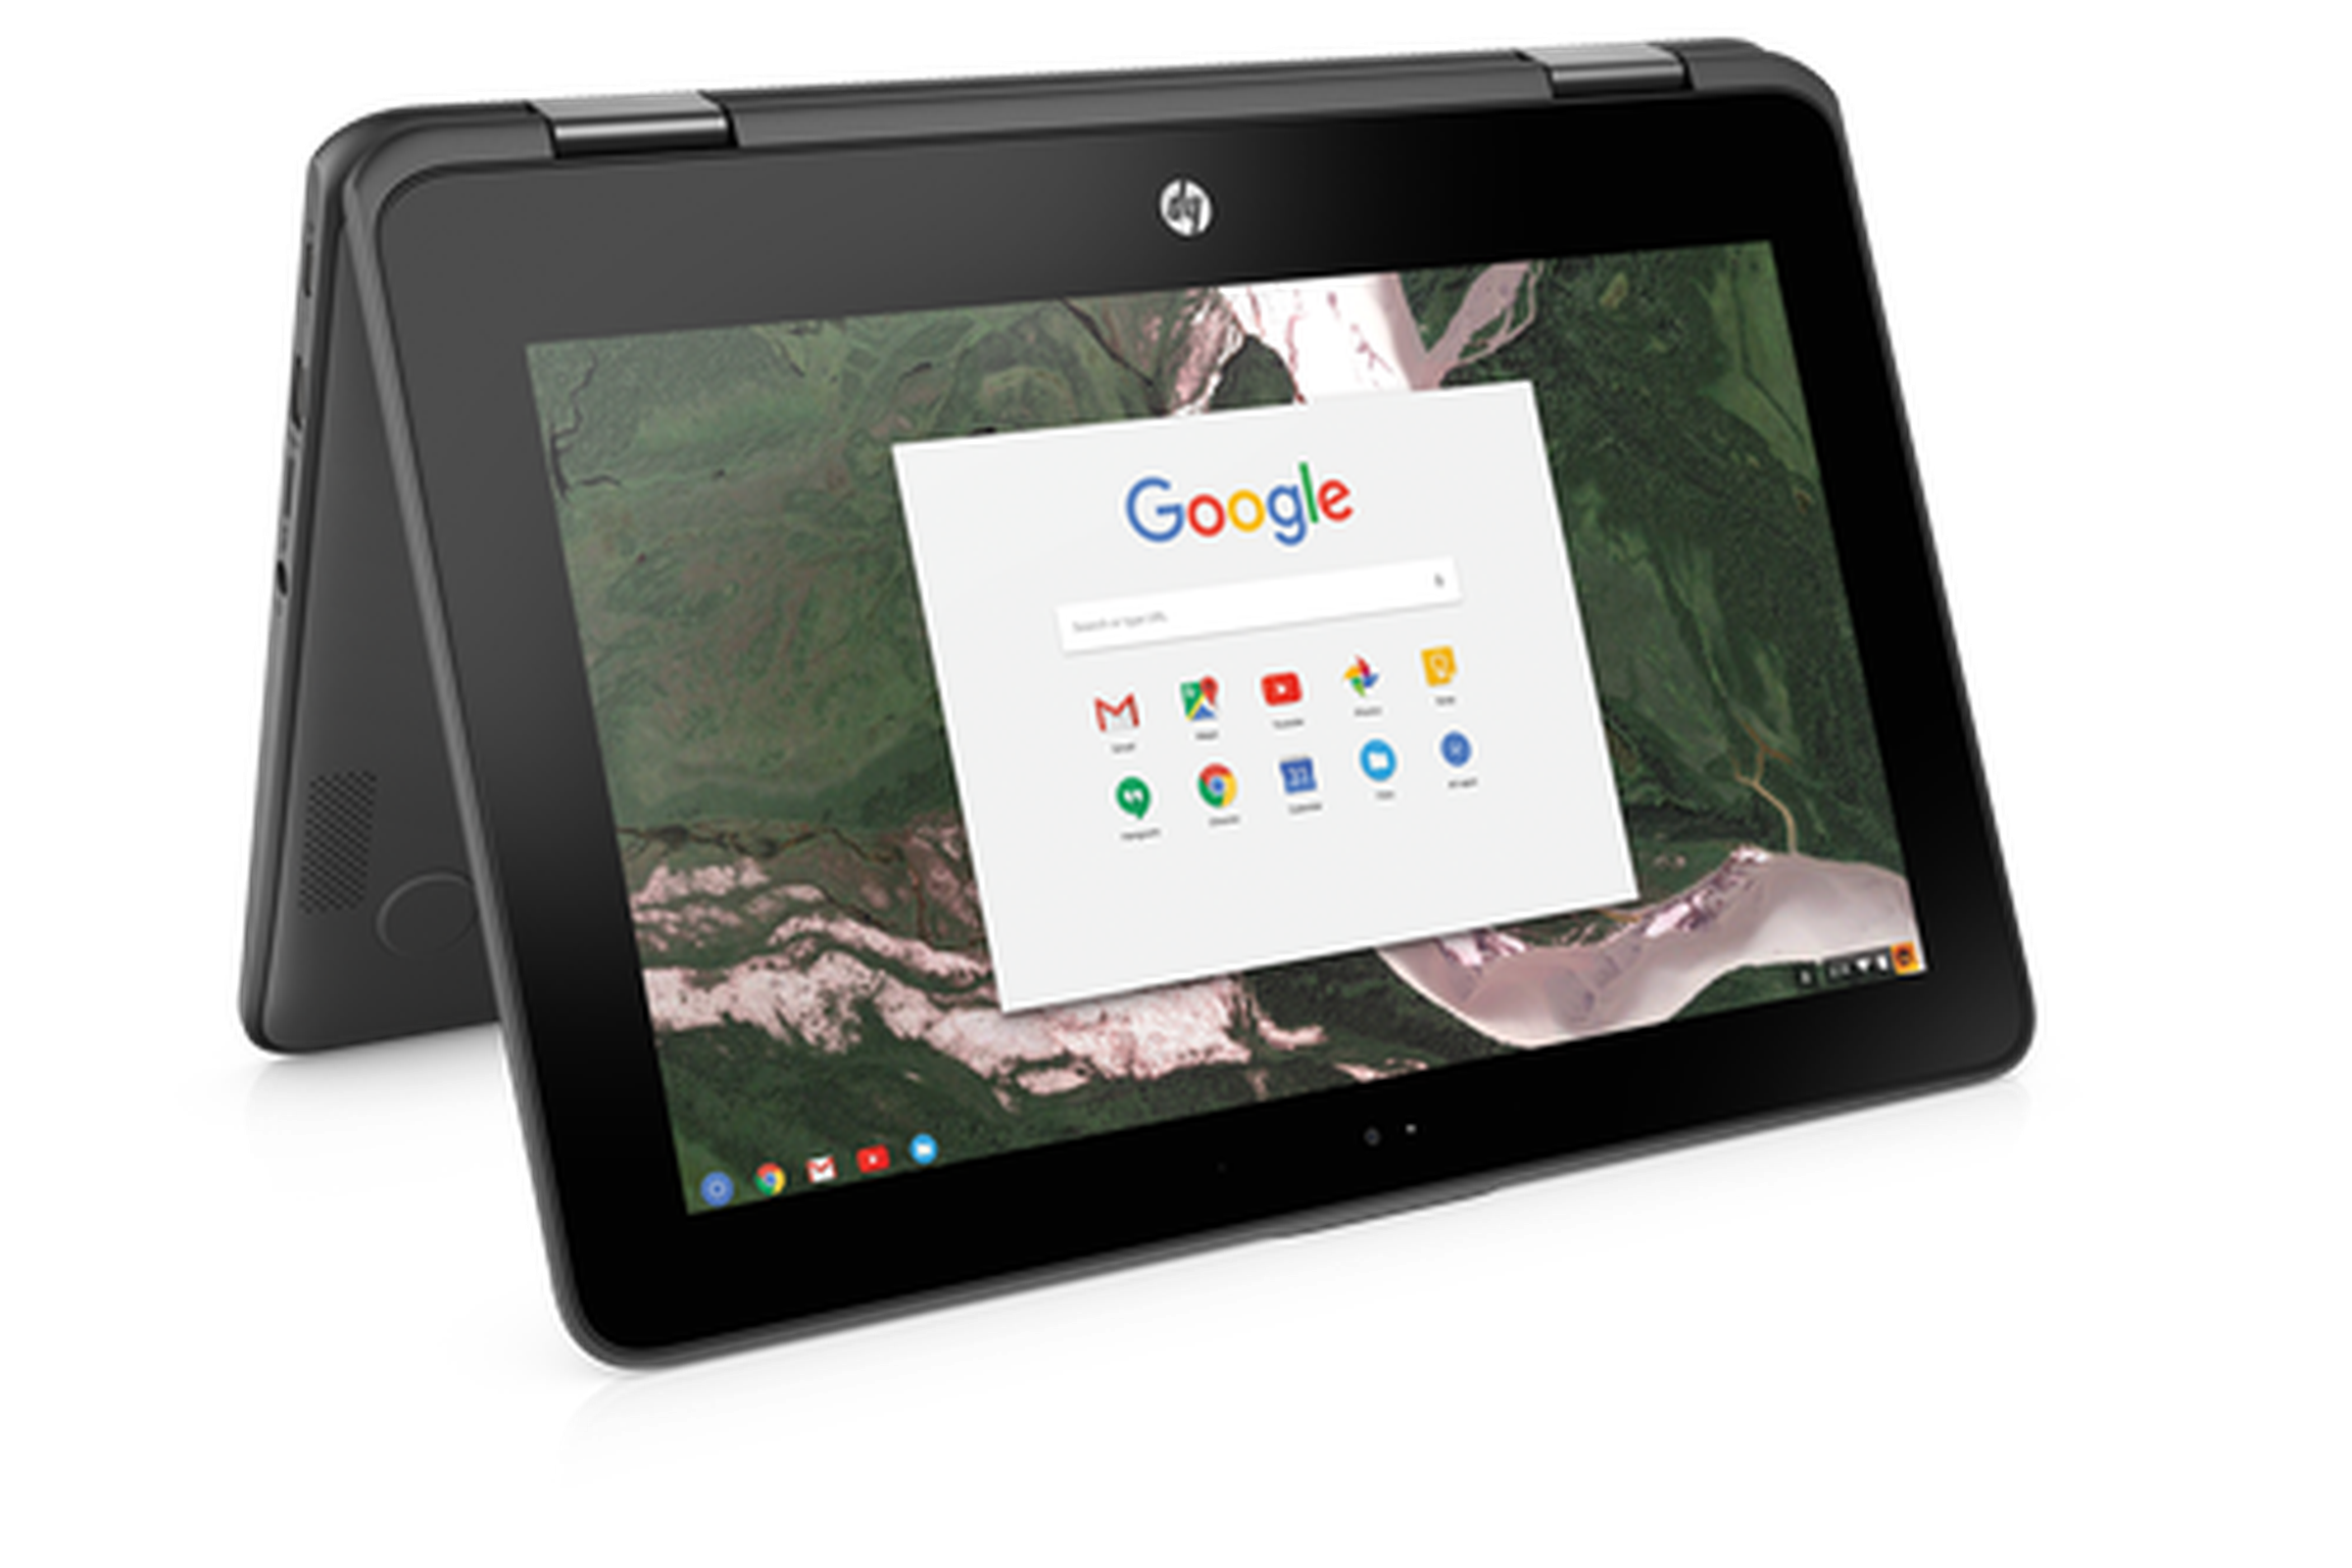 The HP Chromebook x360 11 G1 Education Edition